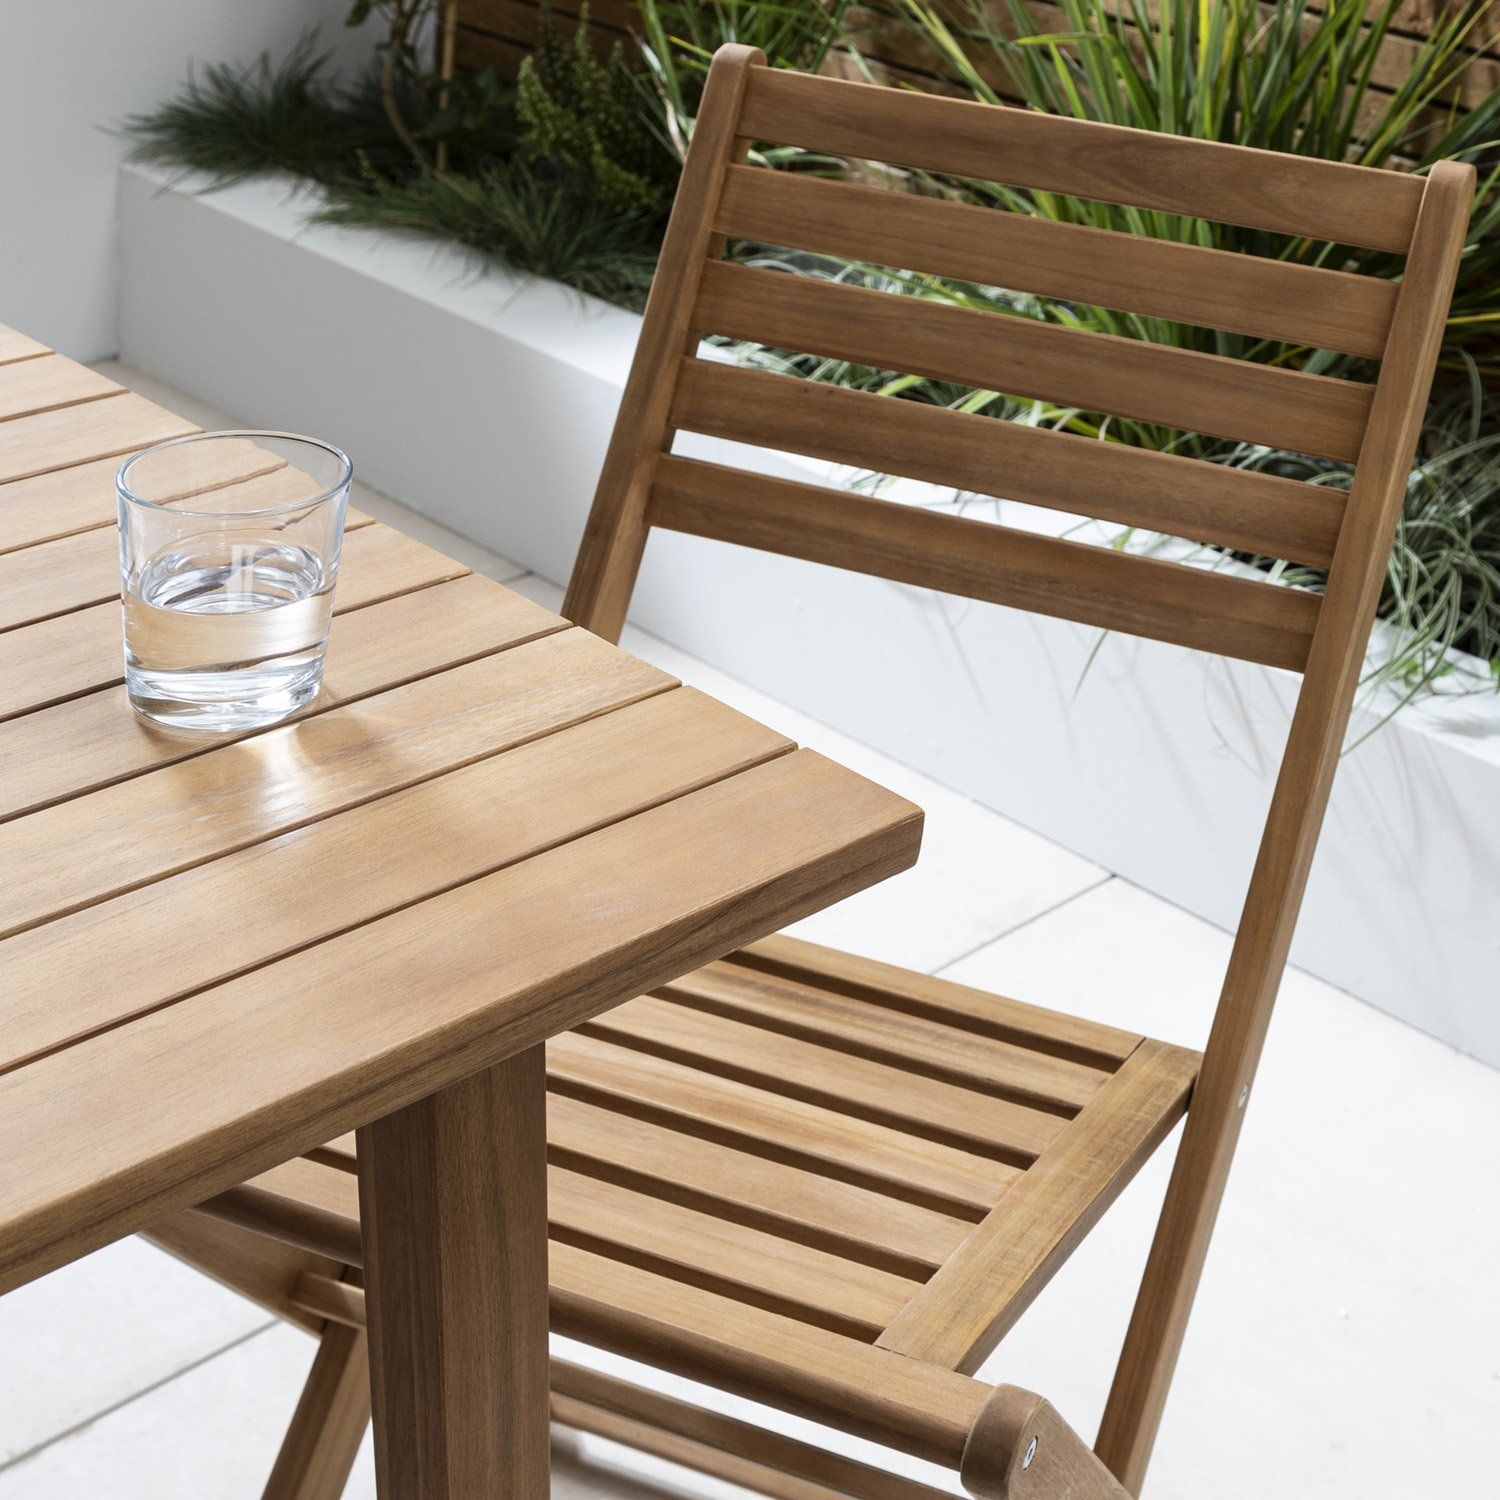 Ackley wooden garden furniture – 4 seater outdoor dining set with cream premium parasol - Laura James